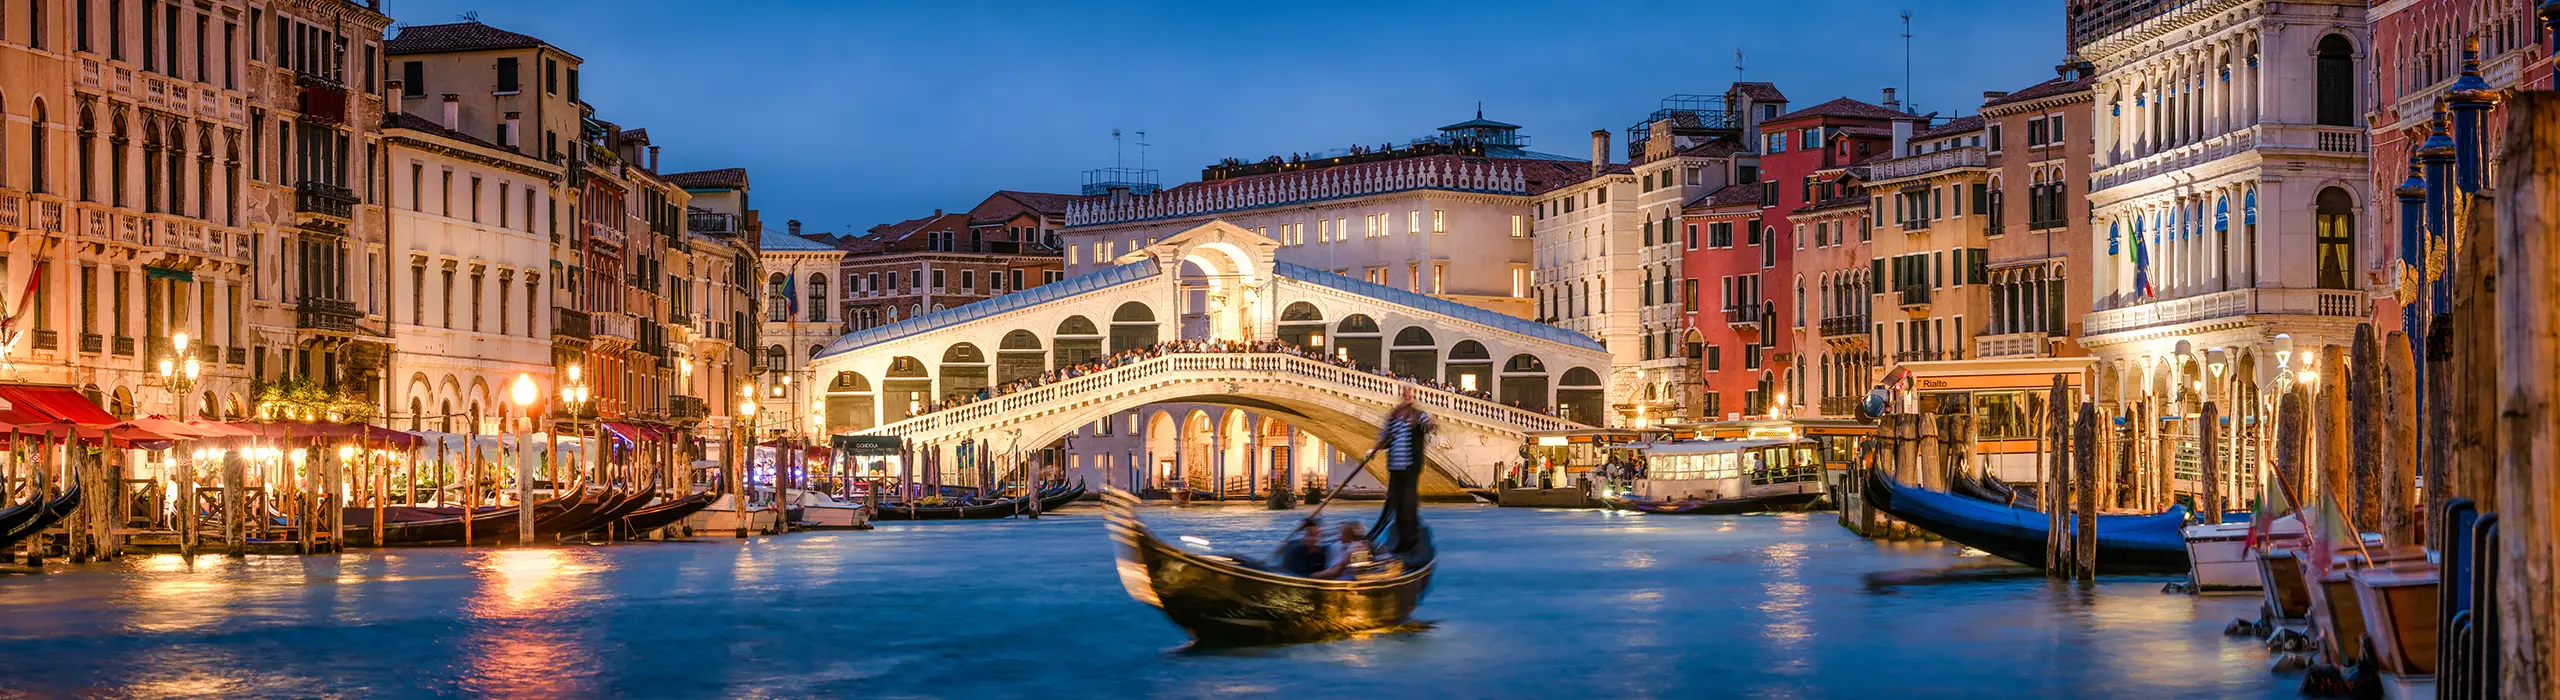 Venedig | travel ways